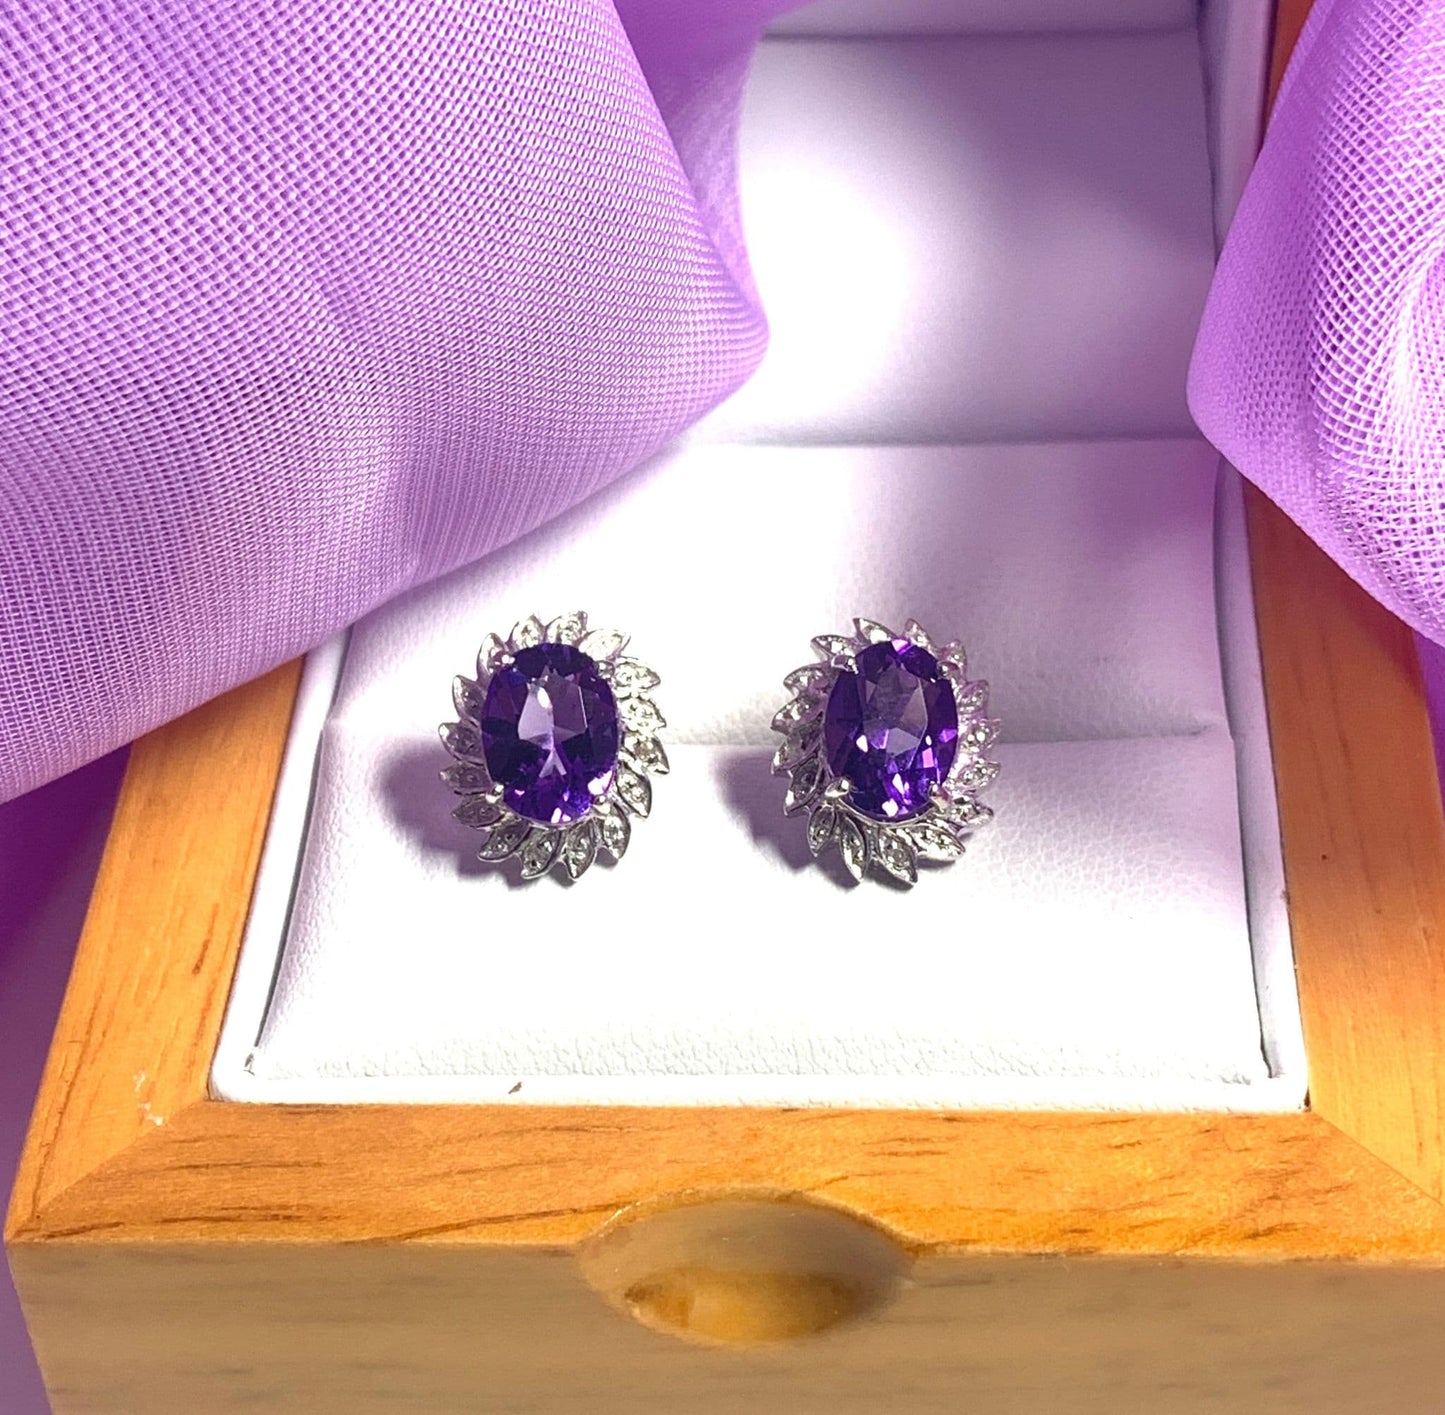 Oval shaped purple amethyst and diamond sterling silver cluster stud earrings